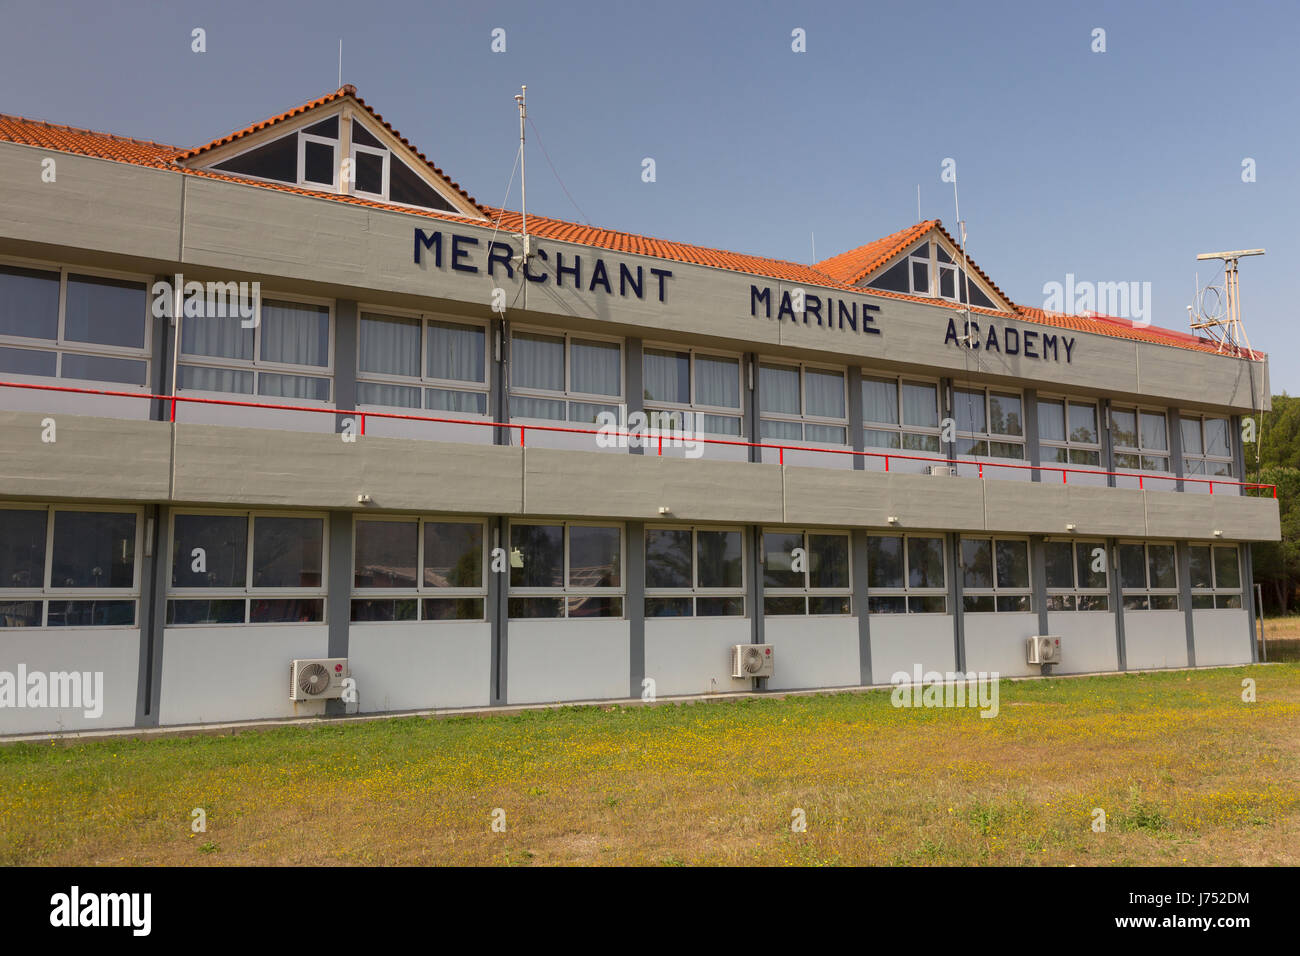 The merchant marine academy of the Ionian Islands in Argostoli, Kefalonia, Greece Stock Photo